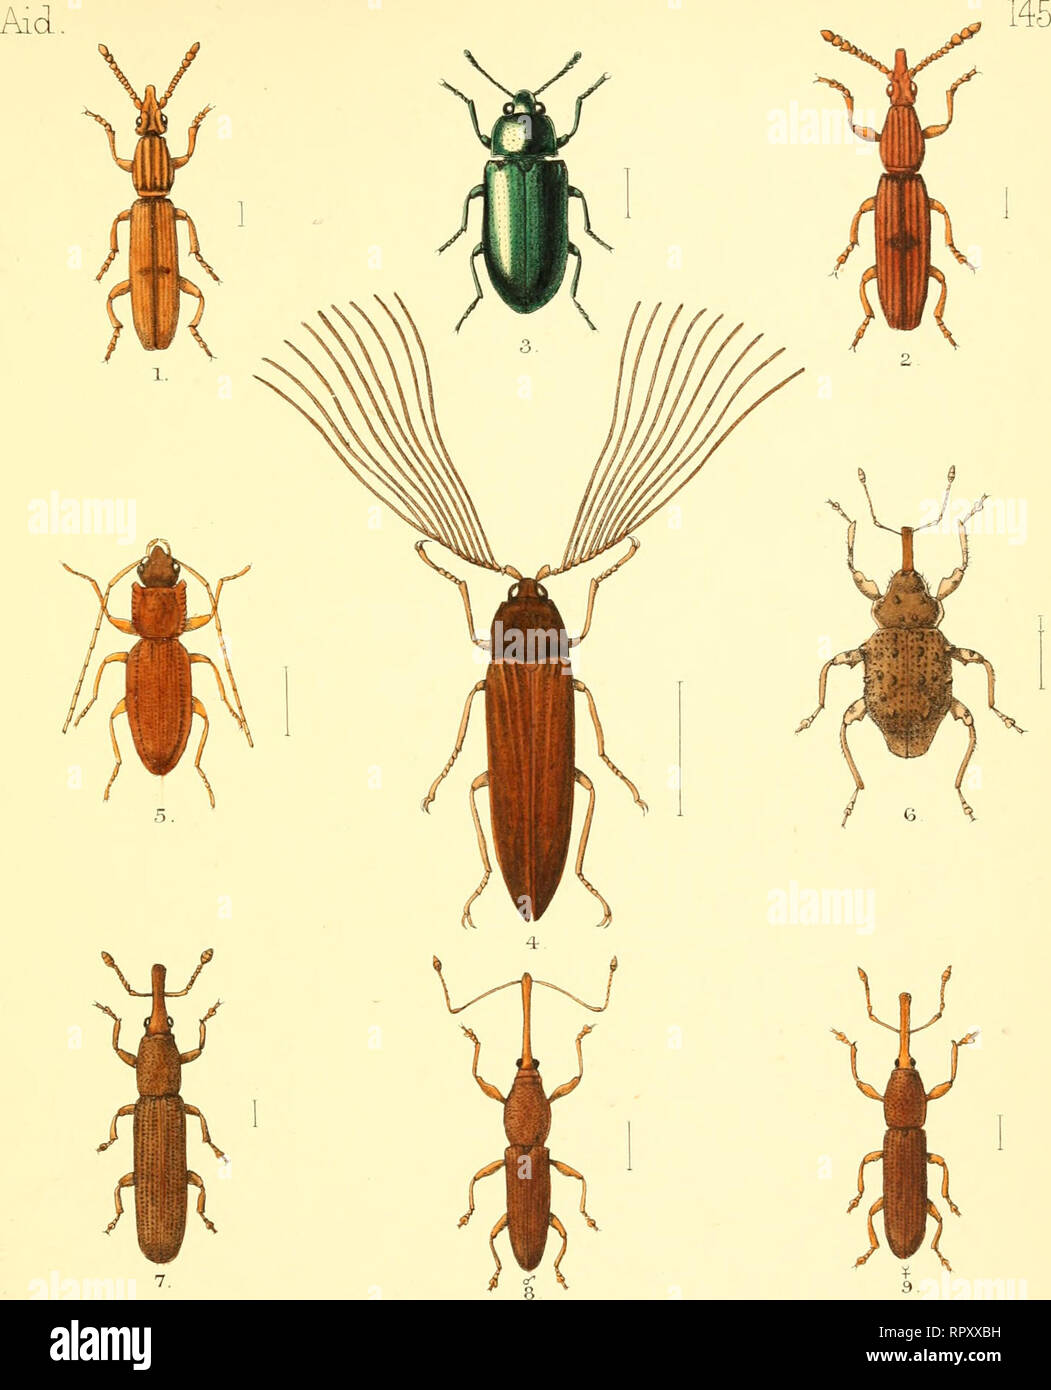 . Aid to the identification of insects. Insects. 1. Higonius Power 1, LeMis,Joujnrh.Lmrb.Soo.XV]I.p883j.p233 Penang. 2. Higonius crux, OUjff,Jou.rrv.Lurv.SooJM,(1883),p.300- Andaman Is 3. ArLKopus Broura, S}imp,ErybMoMa^.m..n87ej,p.76. N.Zealand- 4. Callirhipis lorvgicormsWaleriwase., TrocnsErubSoo. (1877j,p385^ Andaman Is. 5. Brontes pleuralis, Sharp,£ntMoMa^Mjm77J,p270. N, Zealand &lt;6 Crisius vanegatu-s, BroujvMo(JbMZexxLColejopt,(1880Jp.60l N.Zealand. 7. Agnlochilusppolixus, BT'oujvJ^arv-IVZeal-Col&amp;opi,08.80),p£2l N Zealand, 8.9. Canthortynchus hdusfirvu7h,ManyMZ&amp;aZ. Coh£x^pt.,( Stock Photo